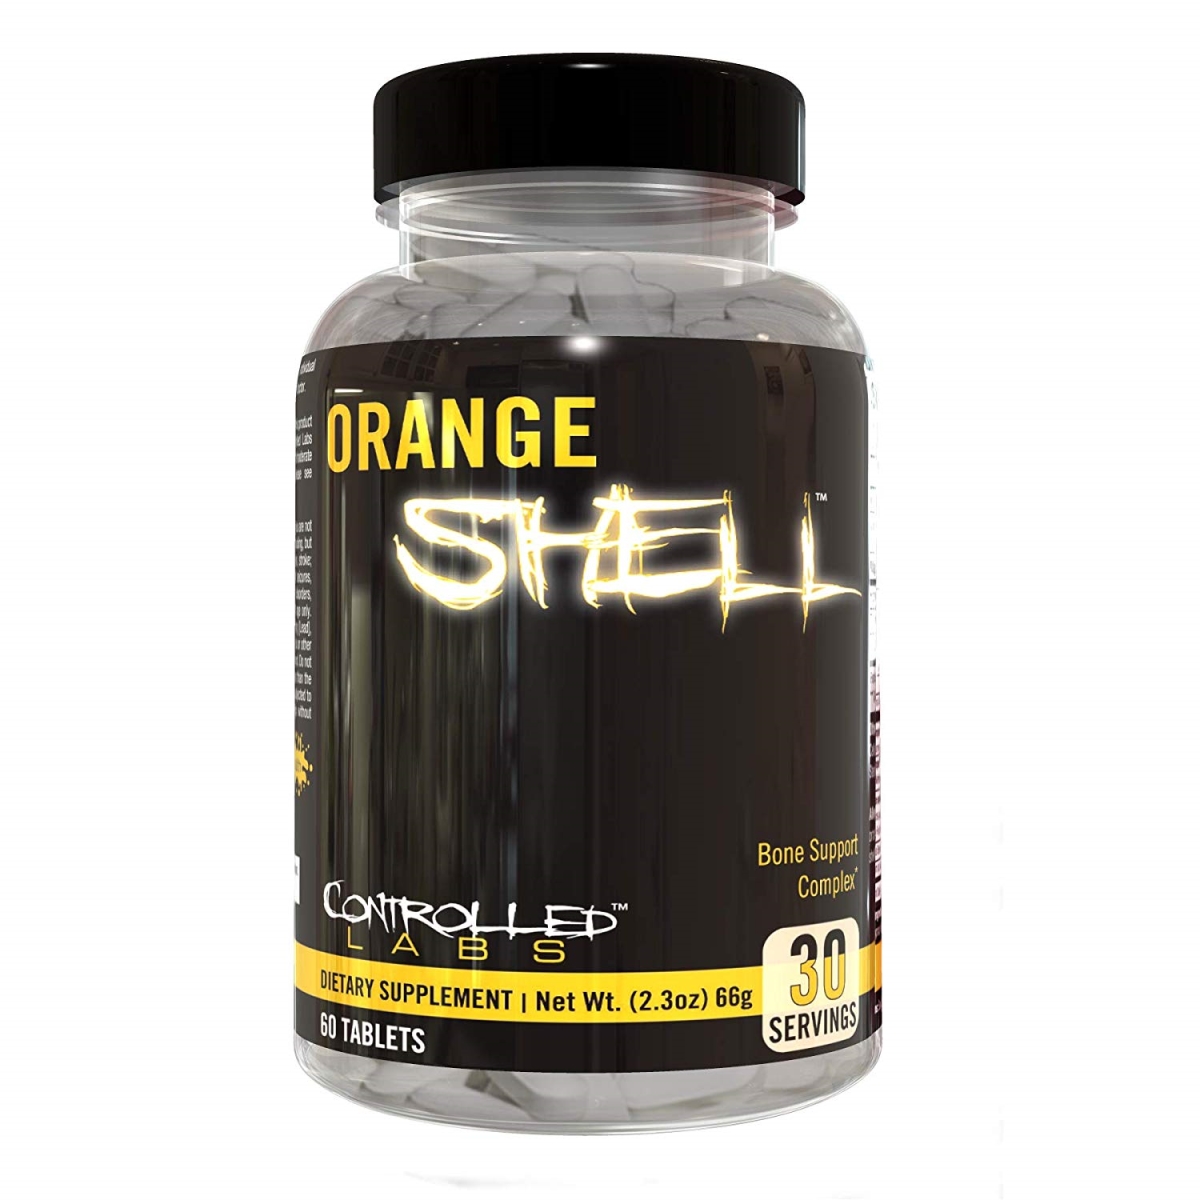 3770140 Orange Shell Bone Support - 60 Tablets